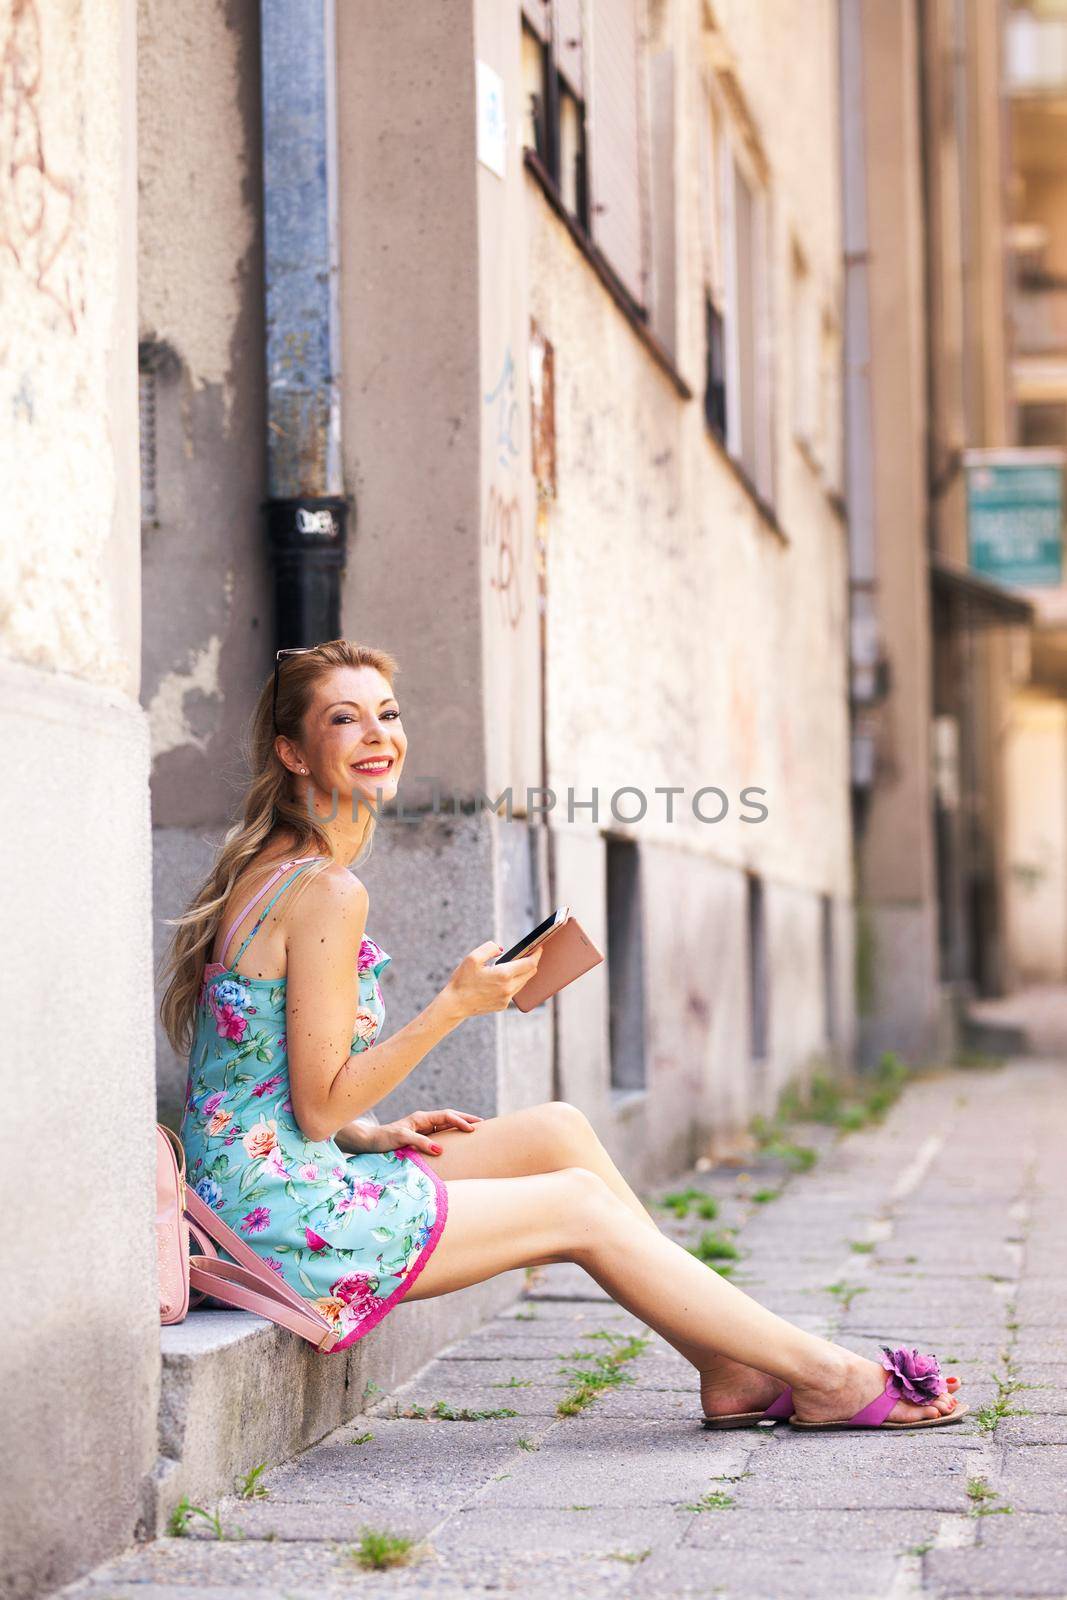 girl sitting on the sidewalk checking her phone by kokimk